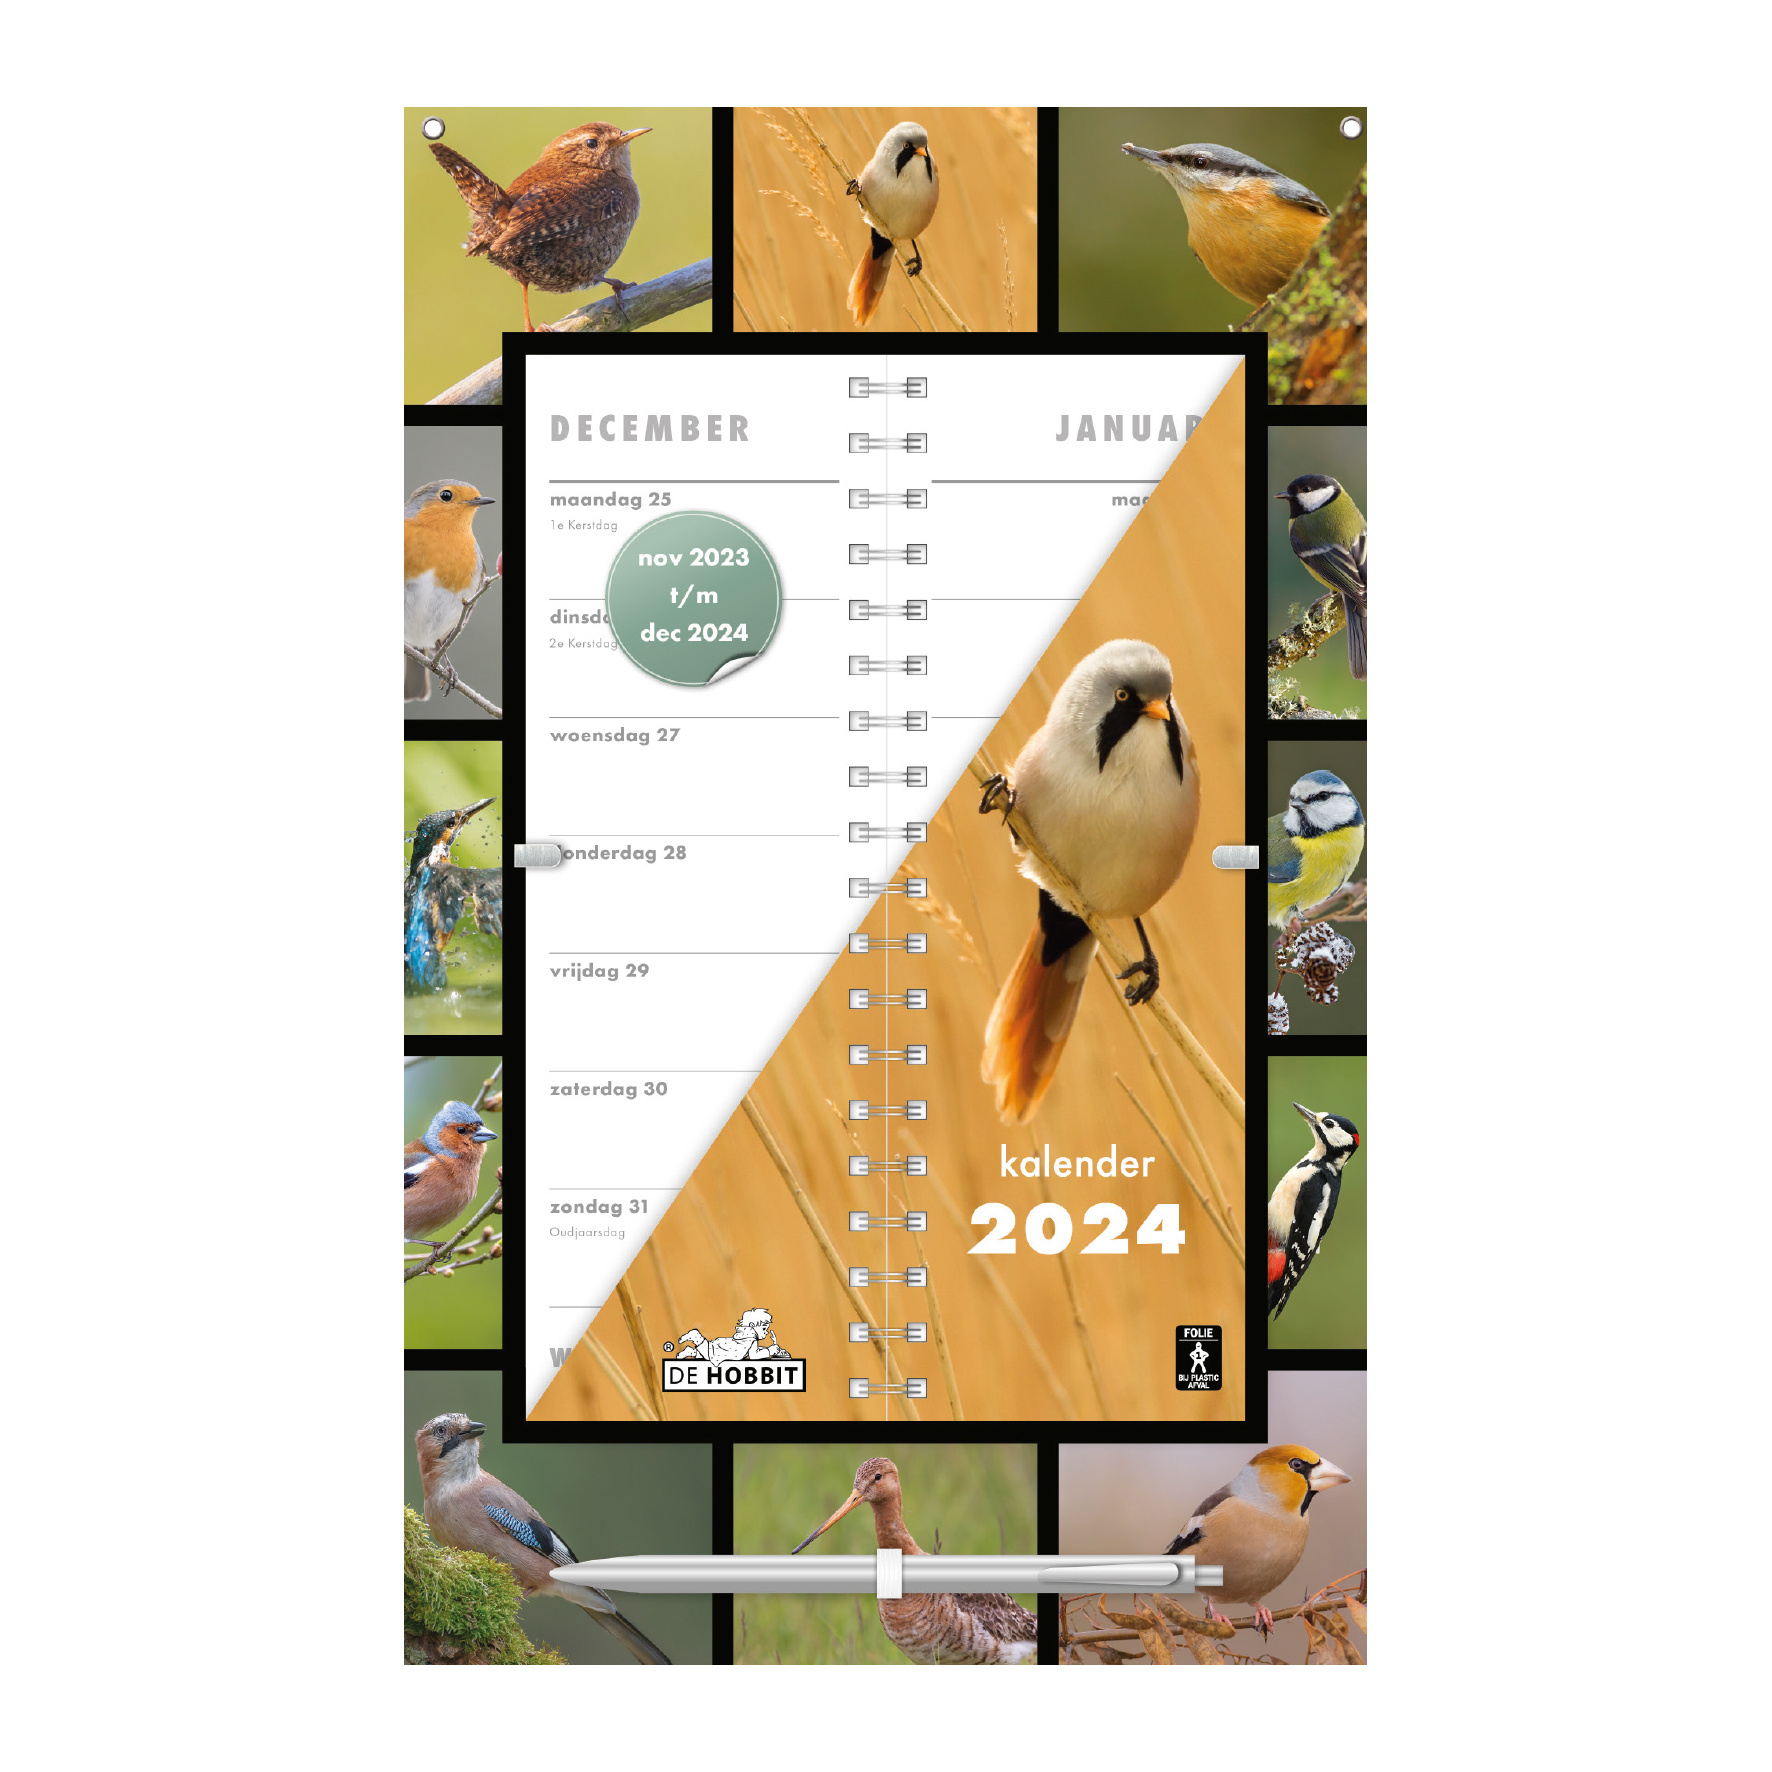 Acheter Birds Cover Calendar 2024 ? Commandez en ligne rapidement